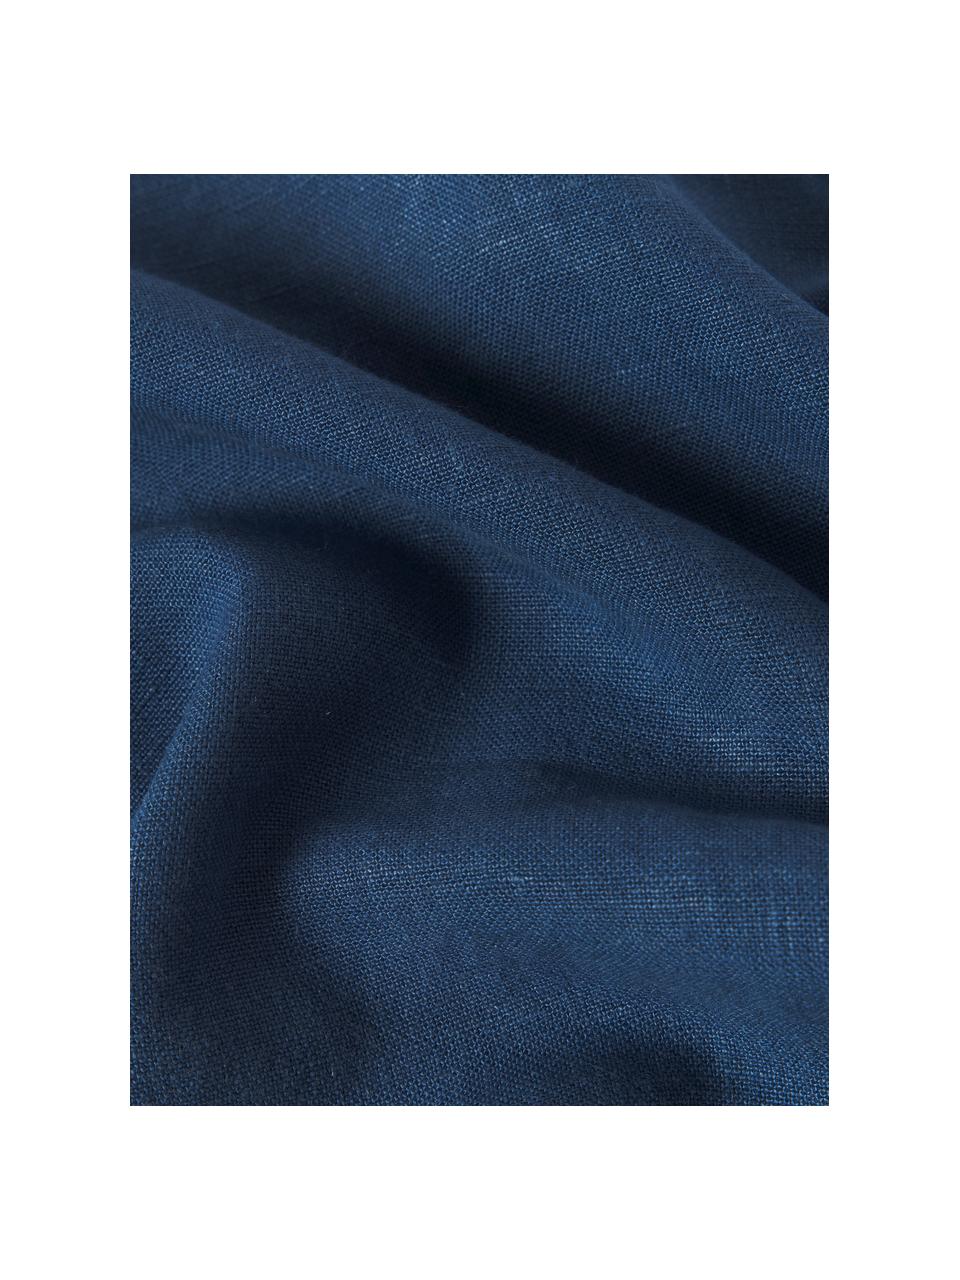 Federa in lino blu navy Lanya, 100% lino, Blu navy, Larg. 30 x Lung. 50 cm